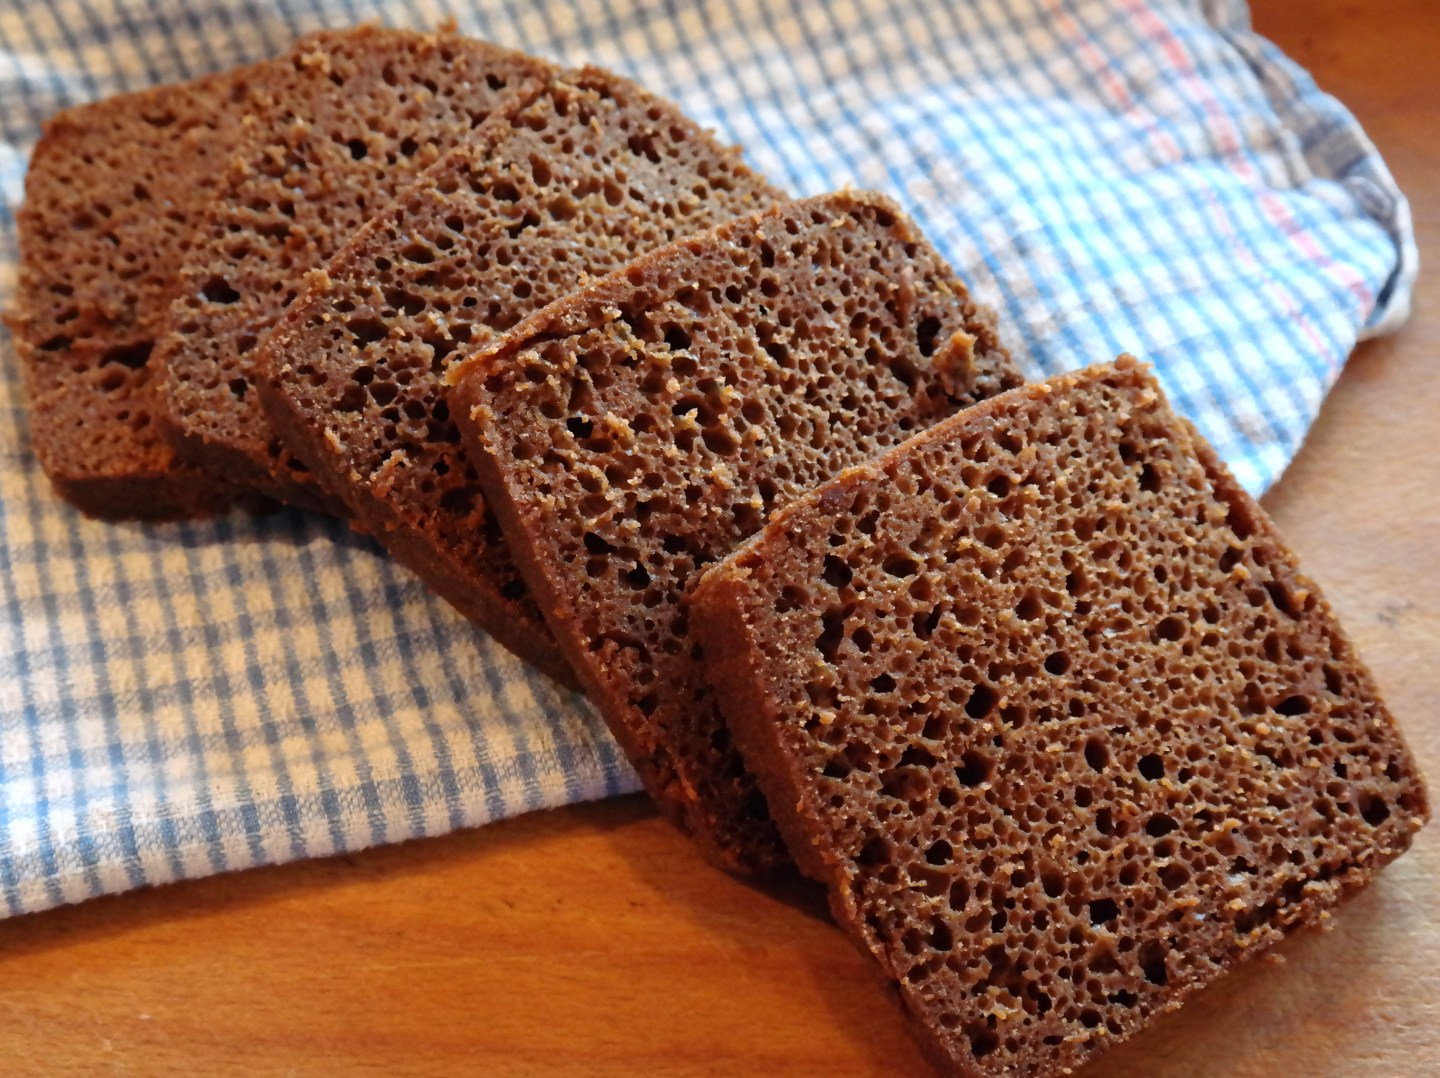  Baked by Hot Spring: Rúgbrauð, or Iceland Dark Rye Bread